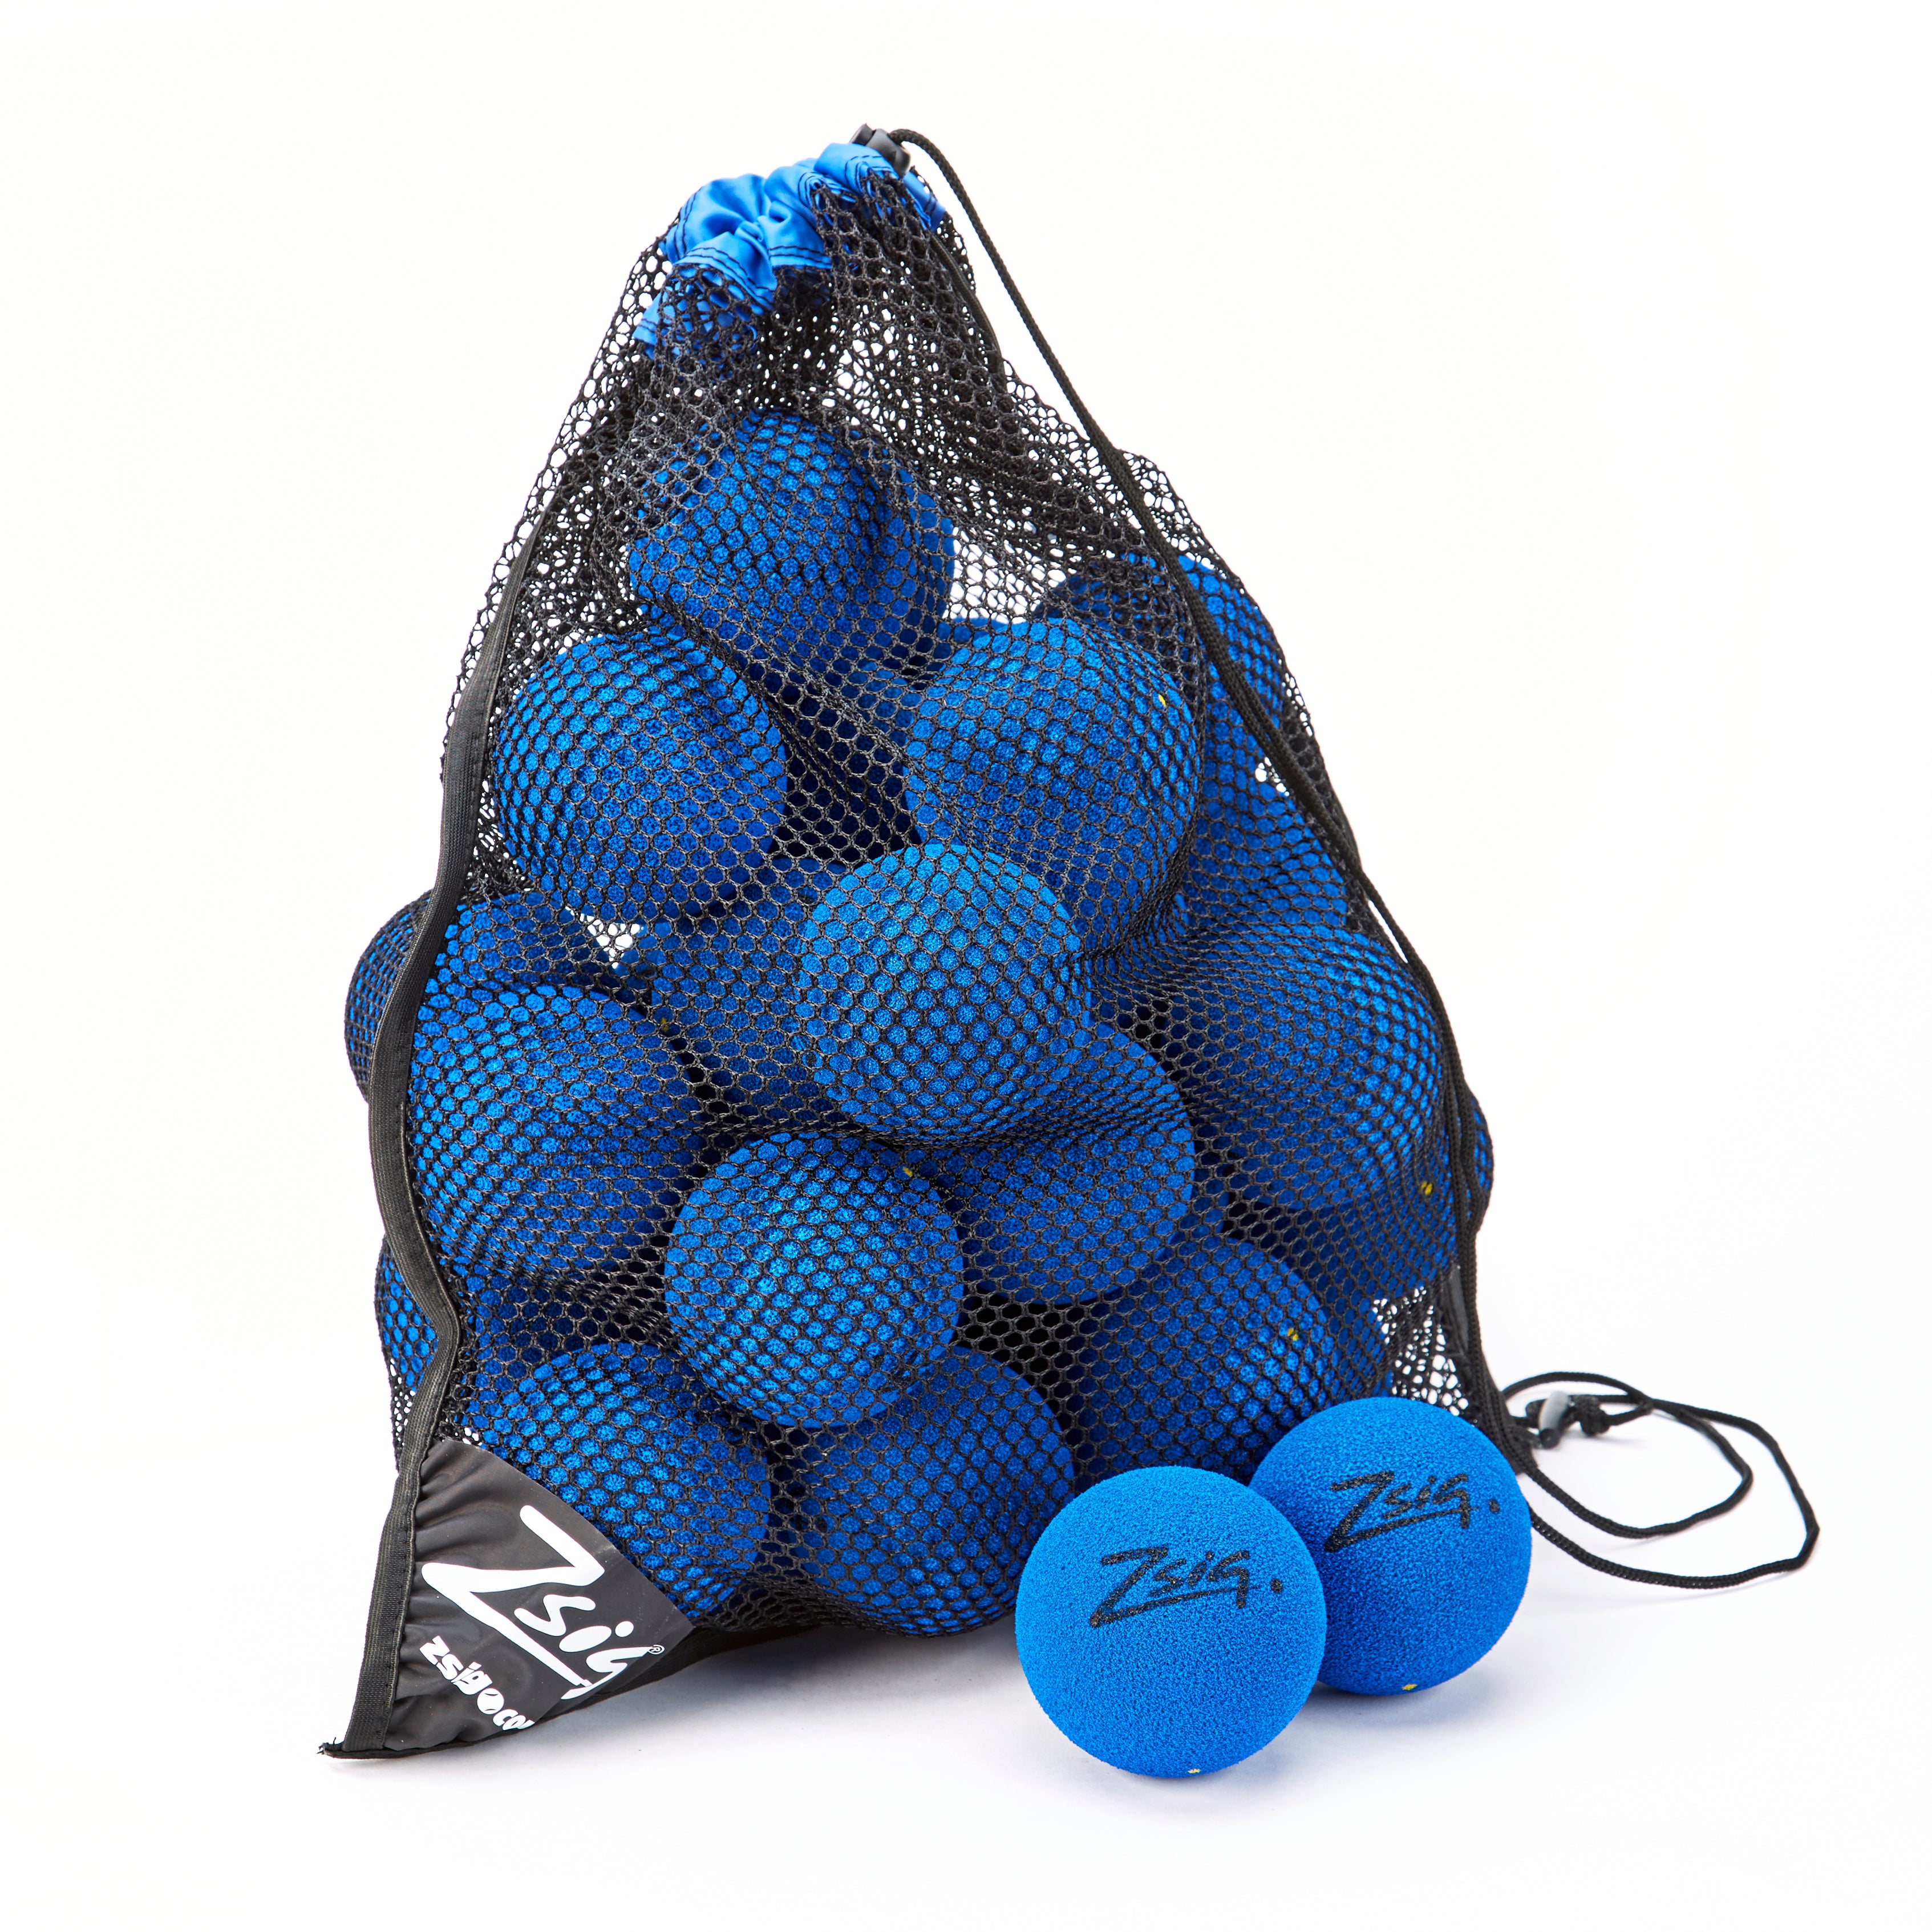 Zsig MP9 Tough Guy Bag of 48 9cm balls in Blue